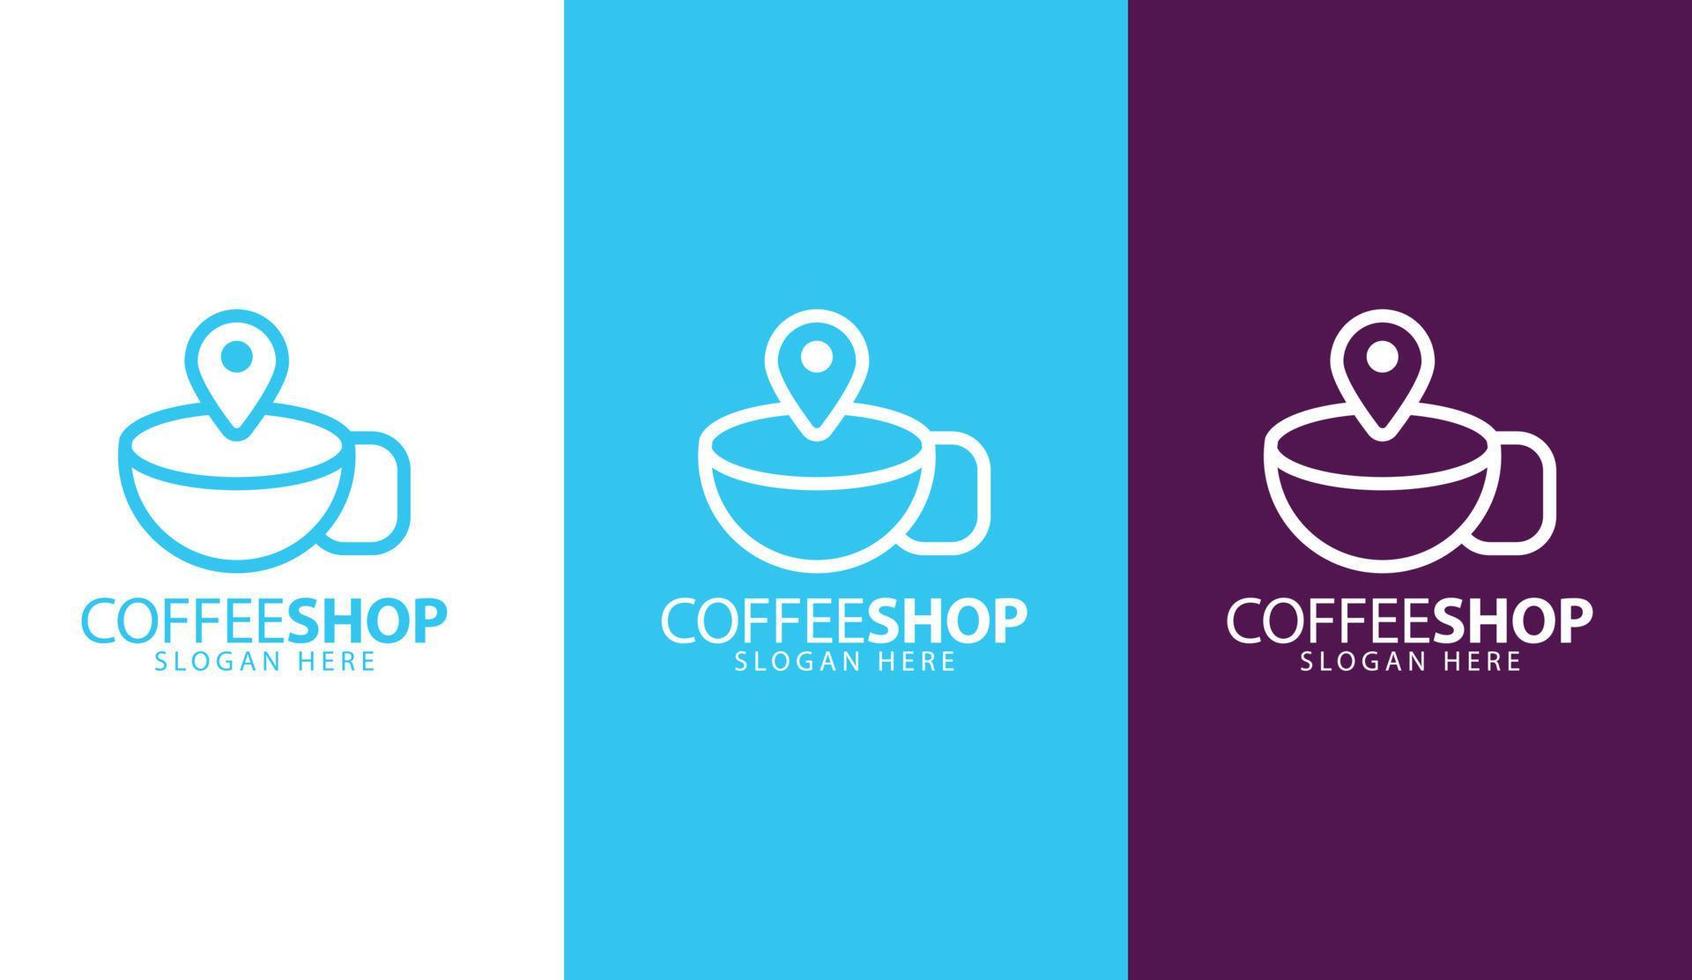 idéia de design simples de logotipo de cafeteria vetor